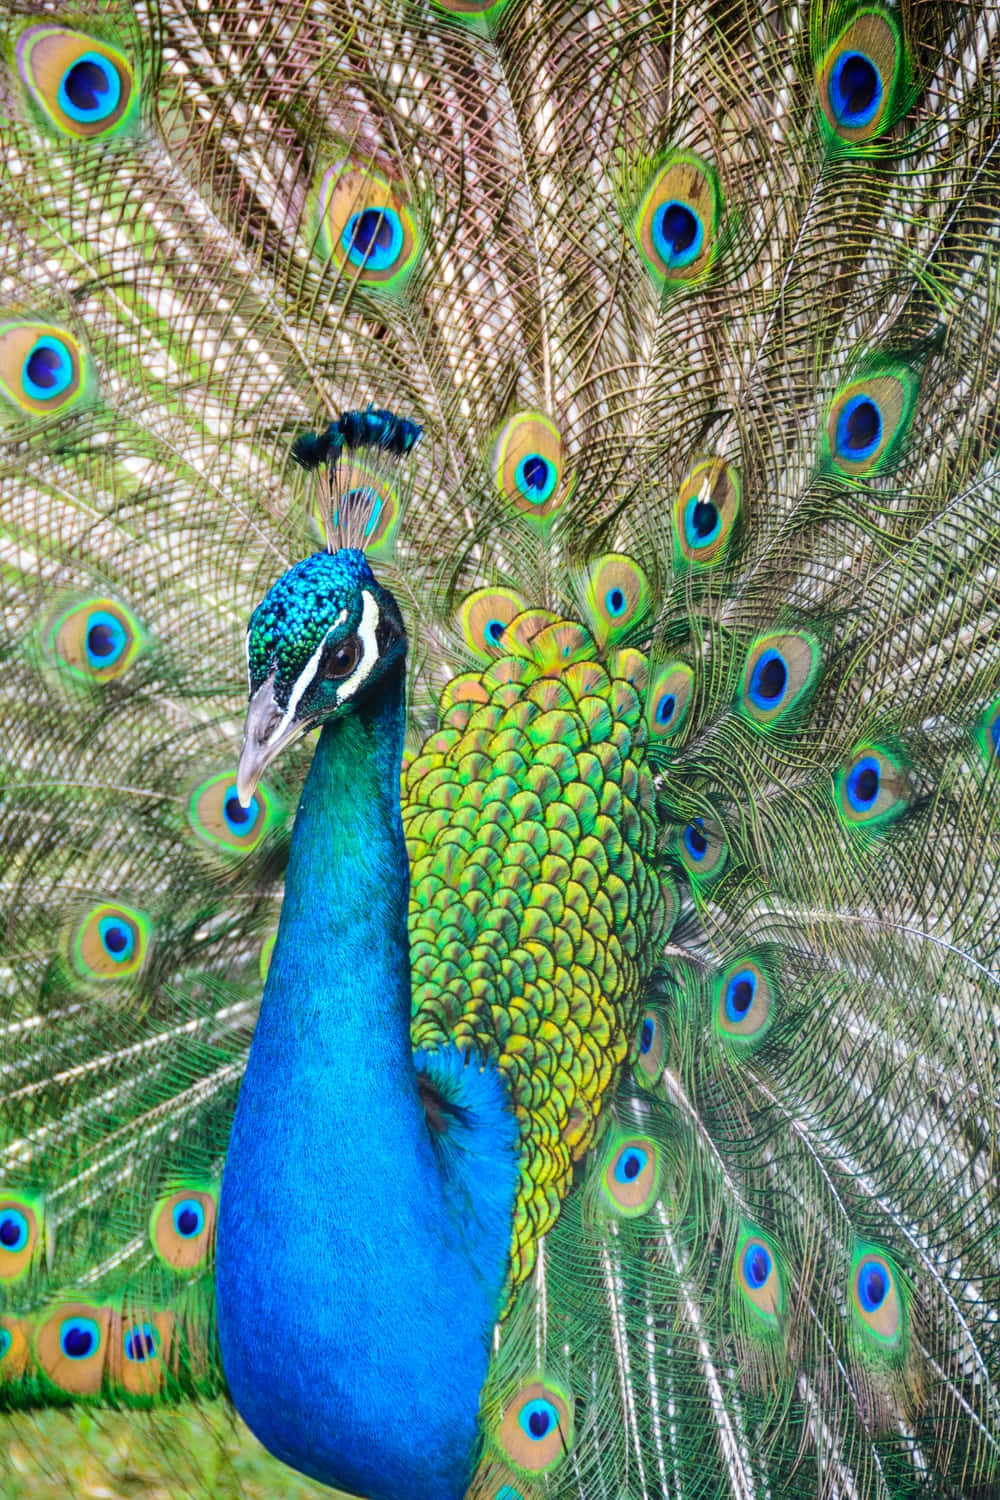 "majestic Peacock In Full Display"